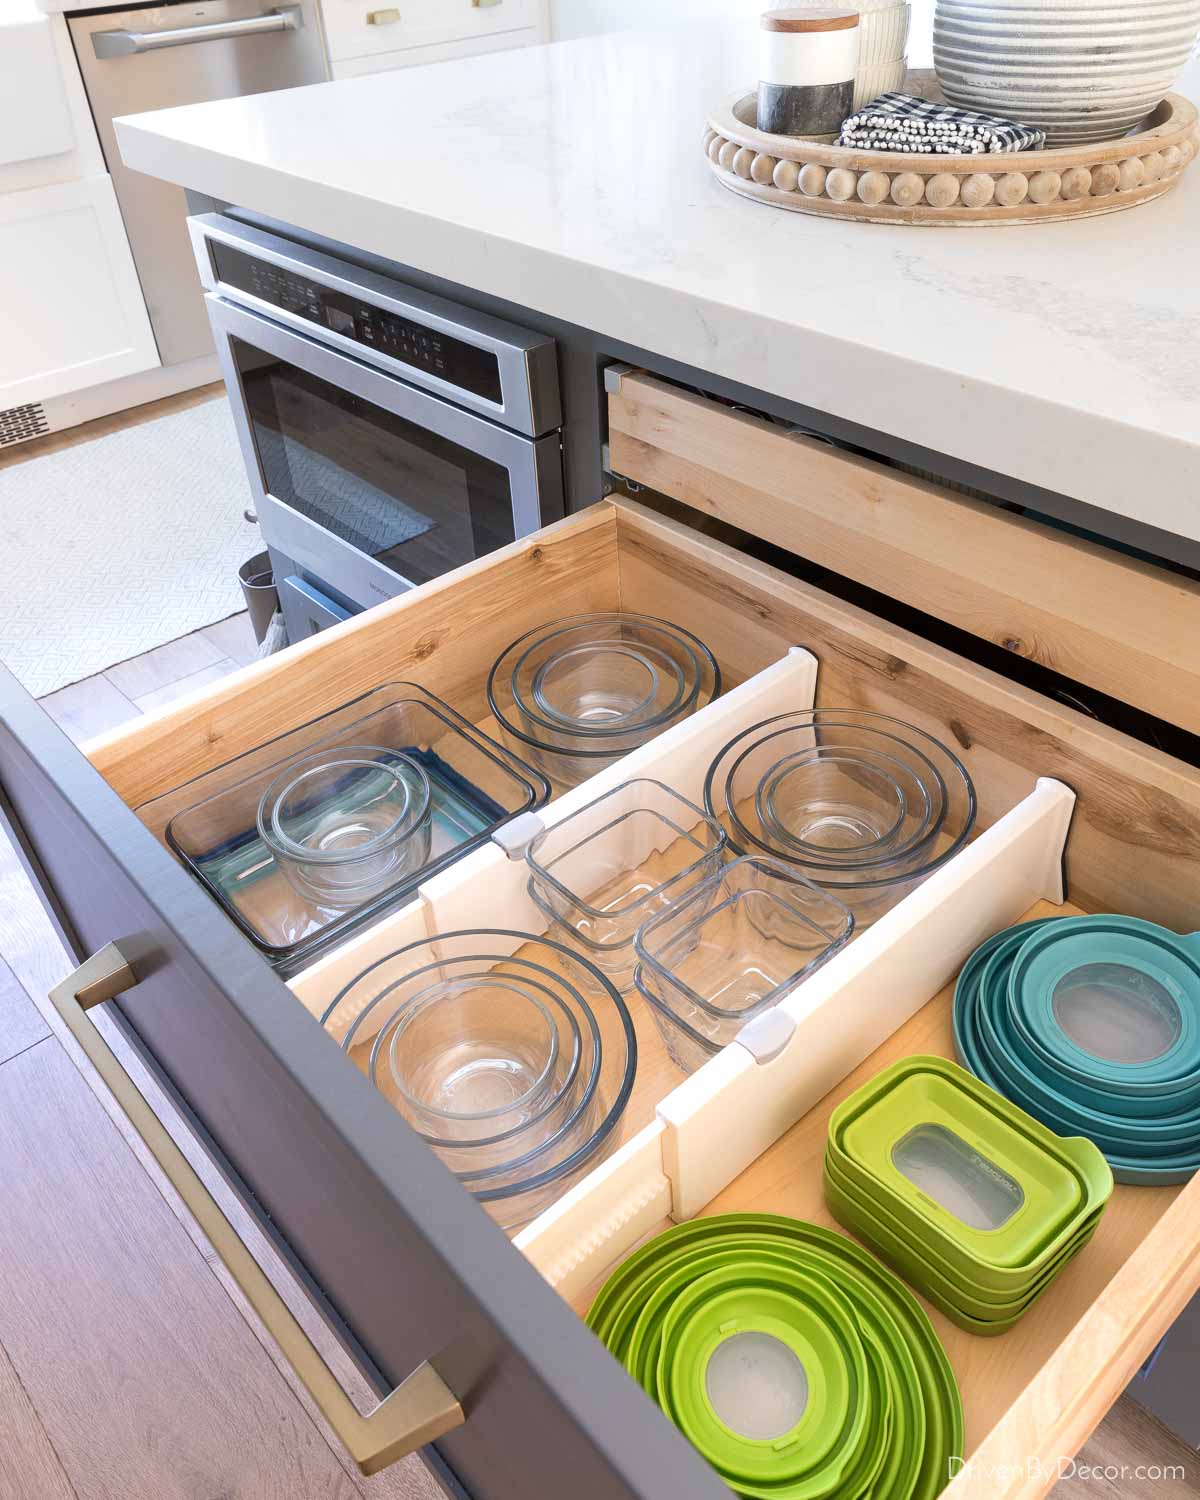 https://www.drivenbydecor.com/wp-content/uploads/2021/08/kitchen-drawer-organizers-dividers.jpg